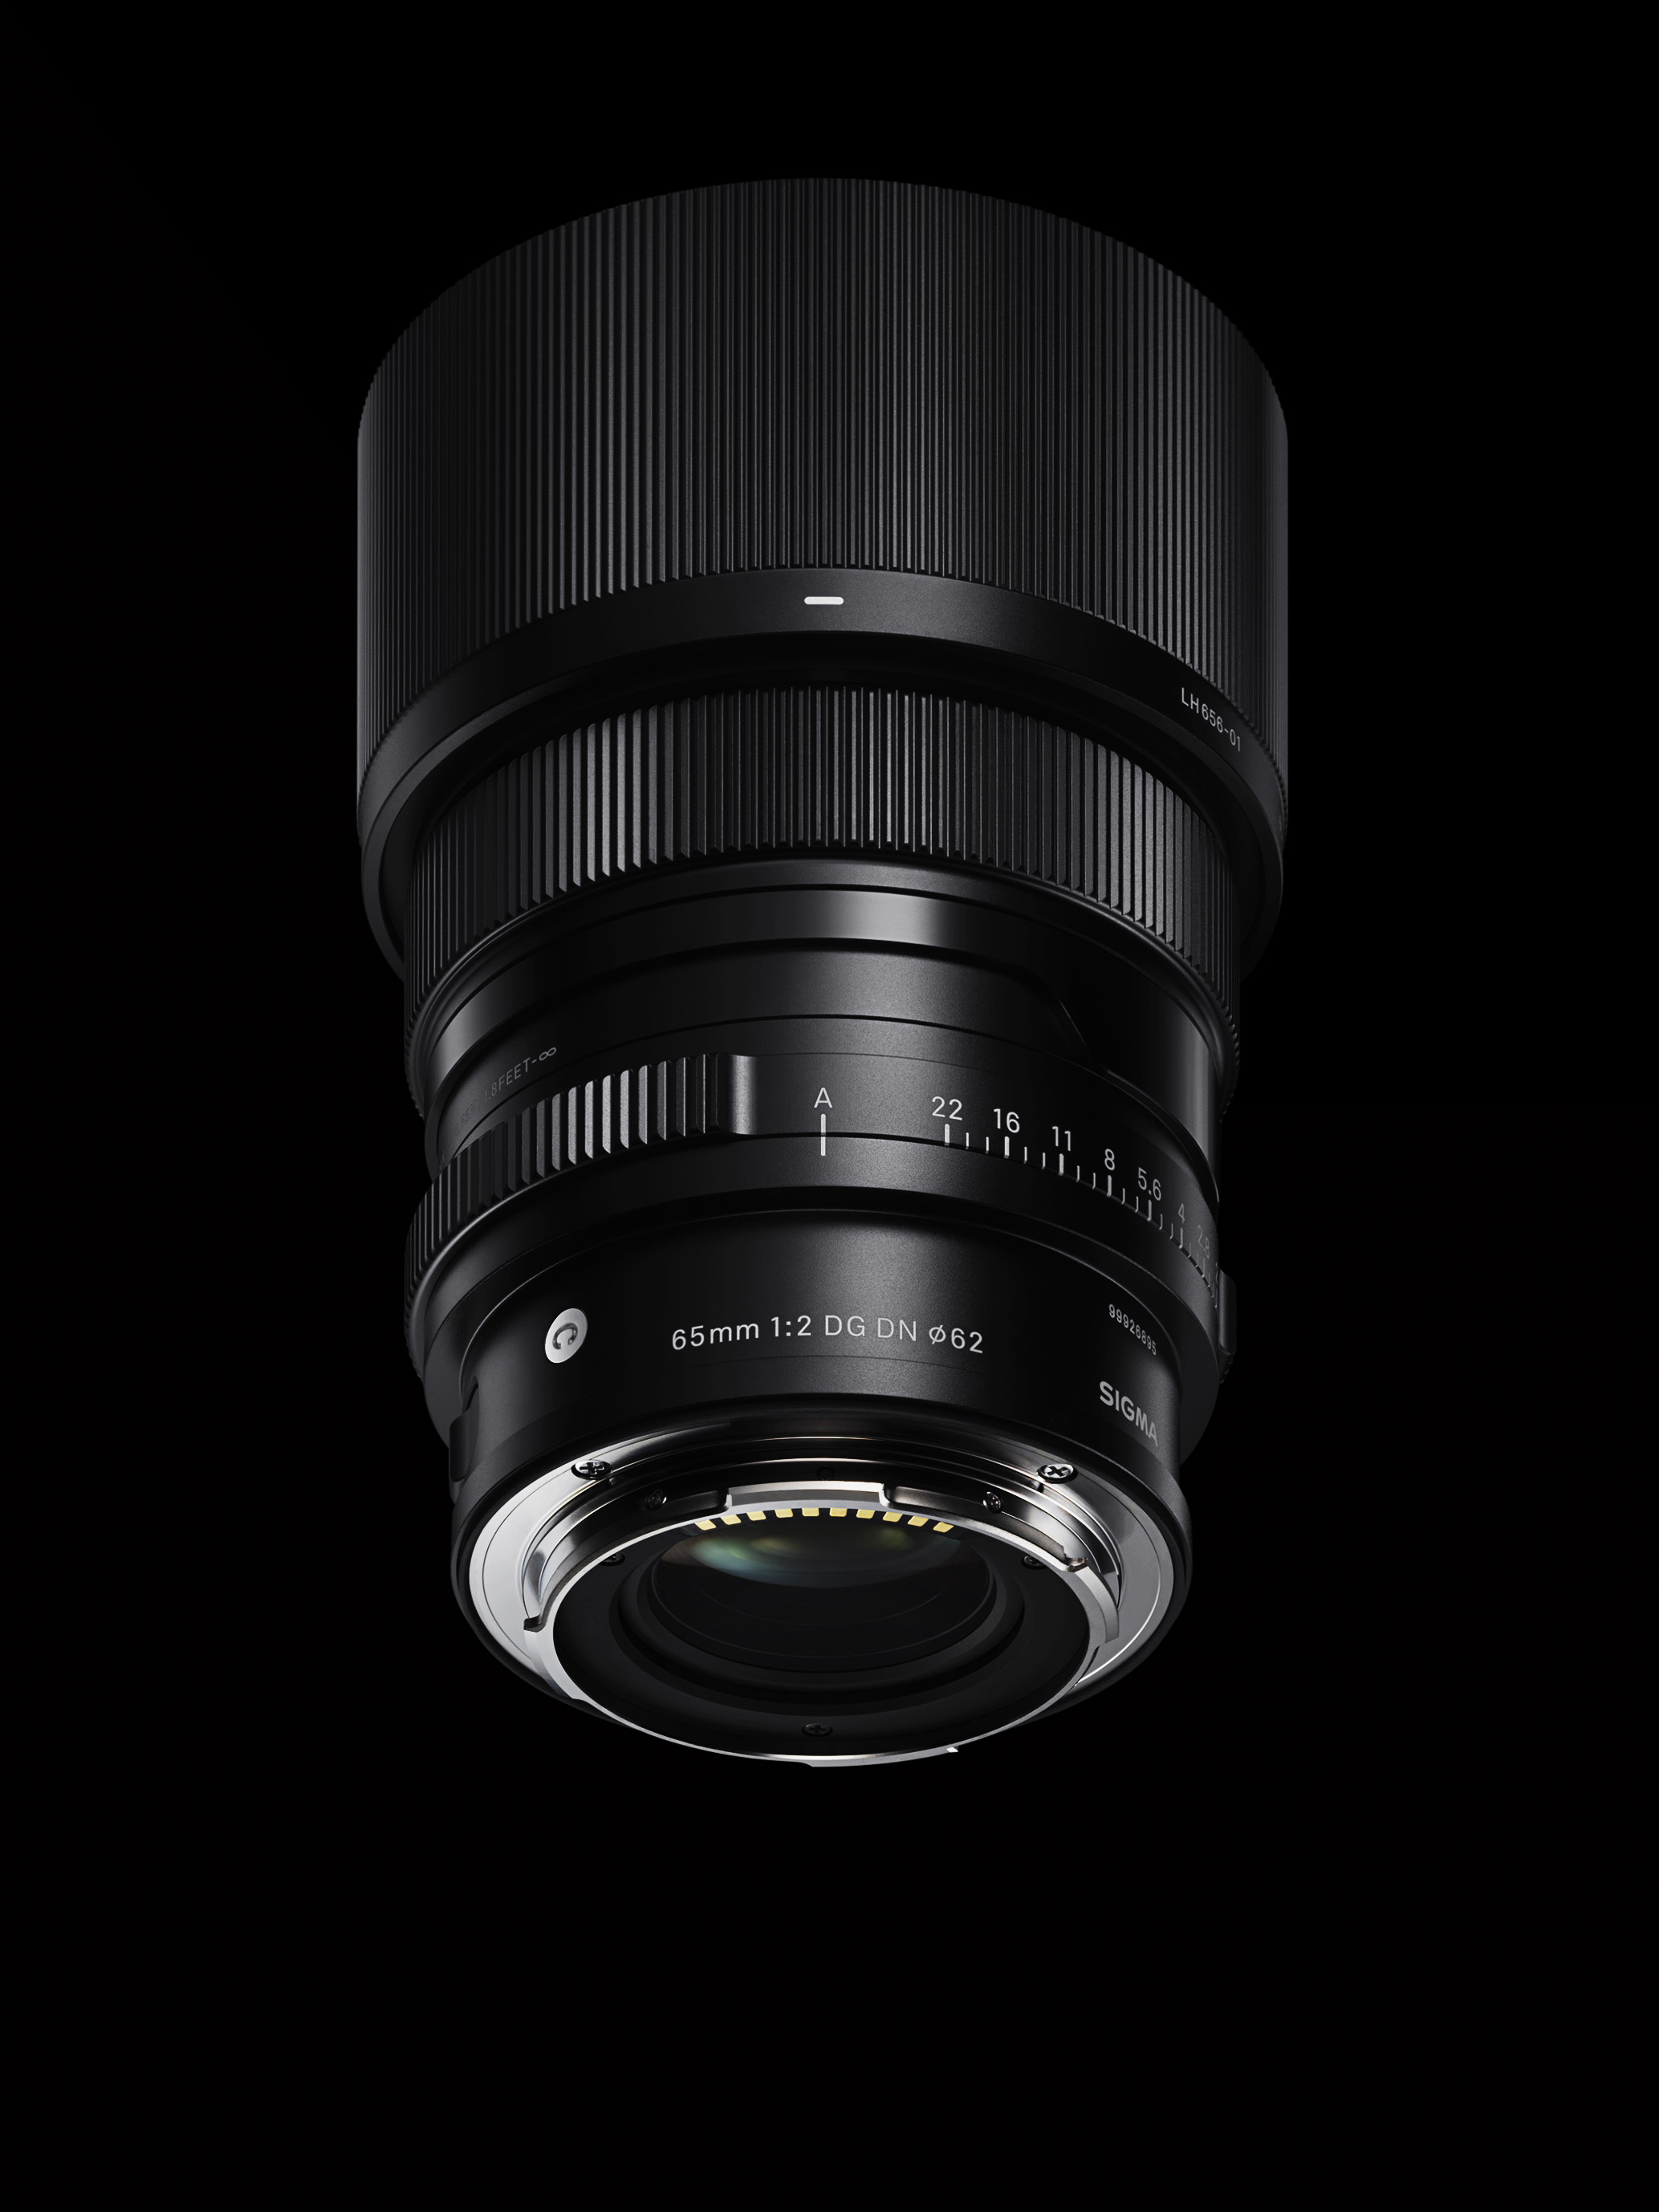 Sigma 65mm F2 DG DN | Contemporary I series lens. Media handout art.